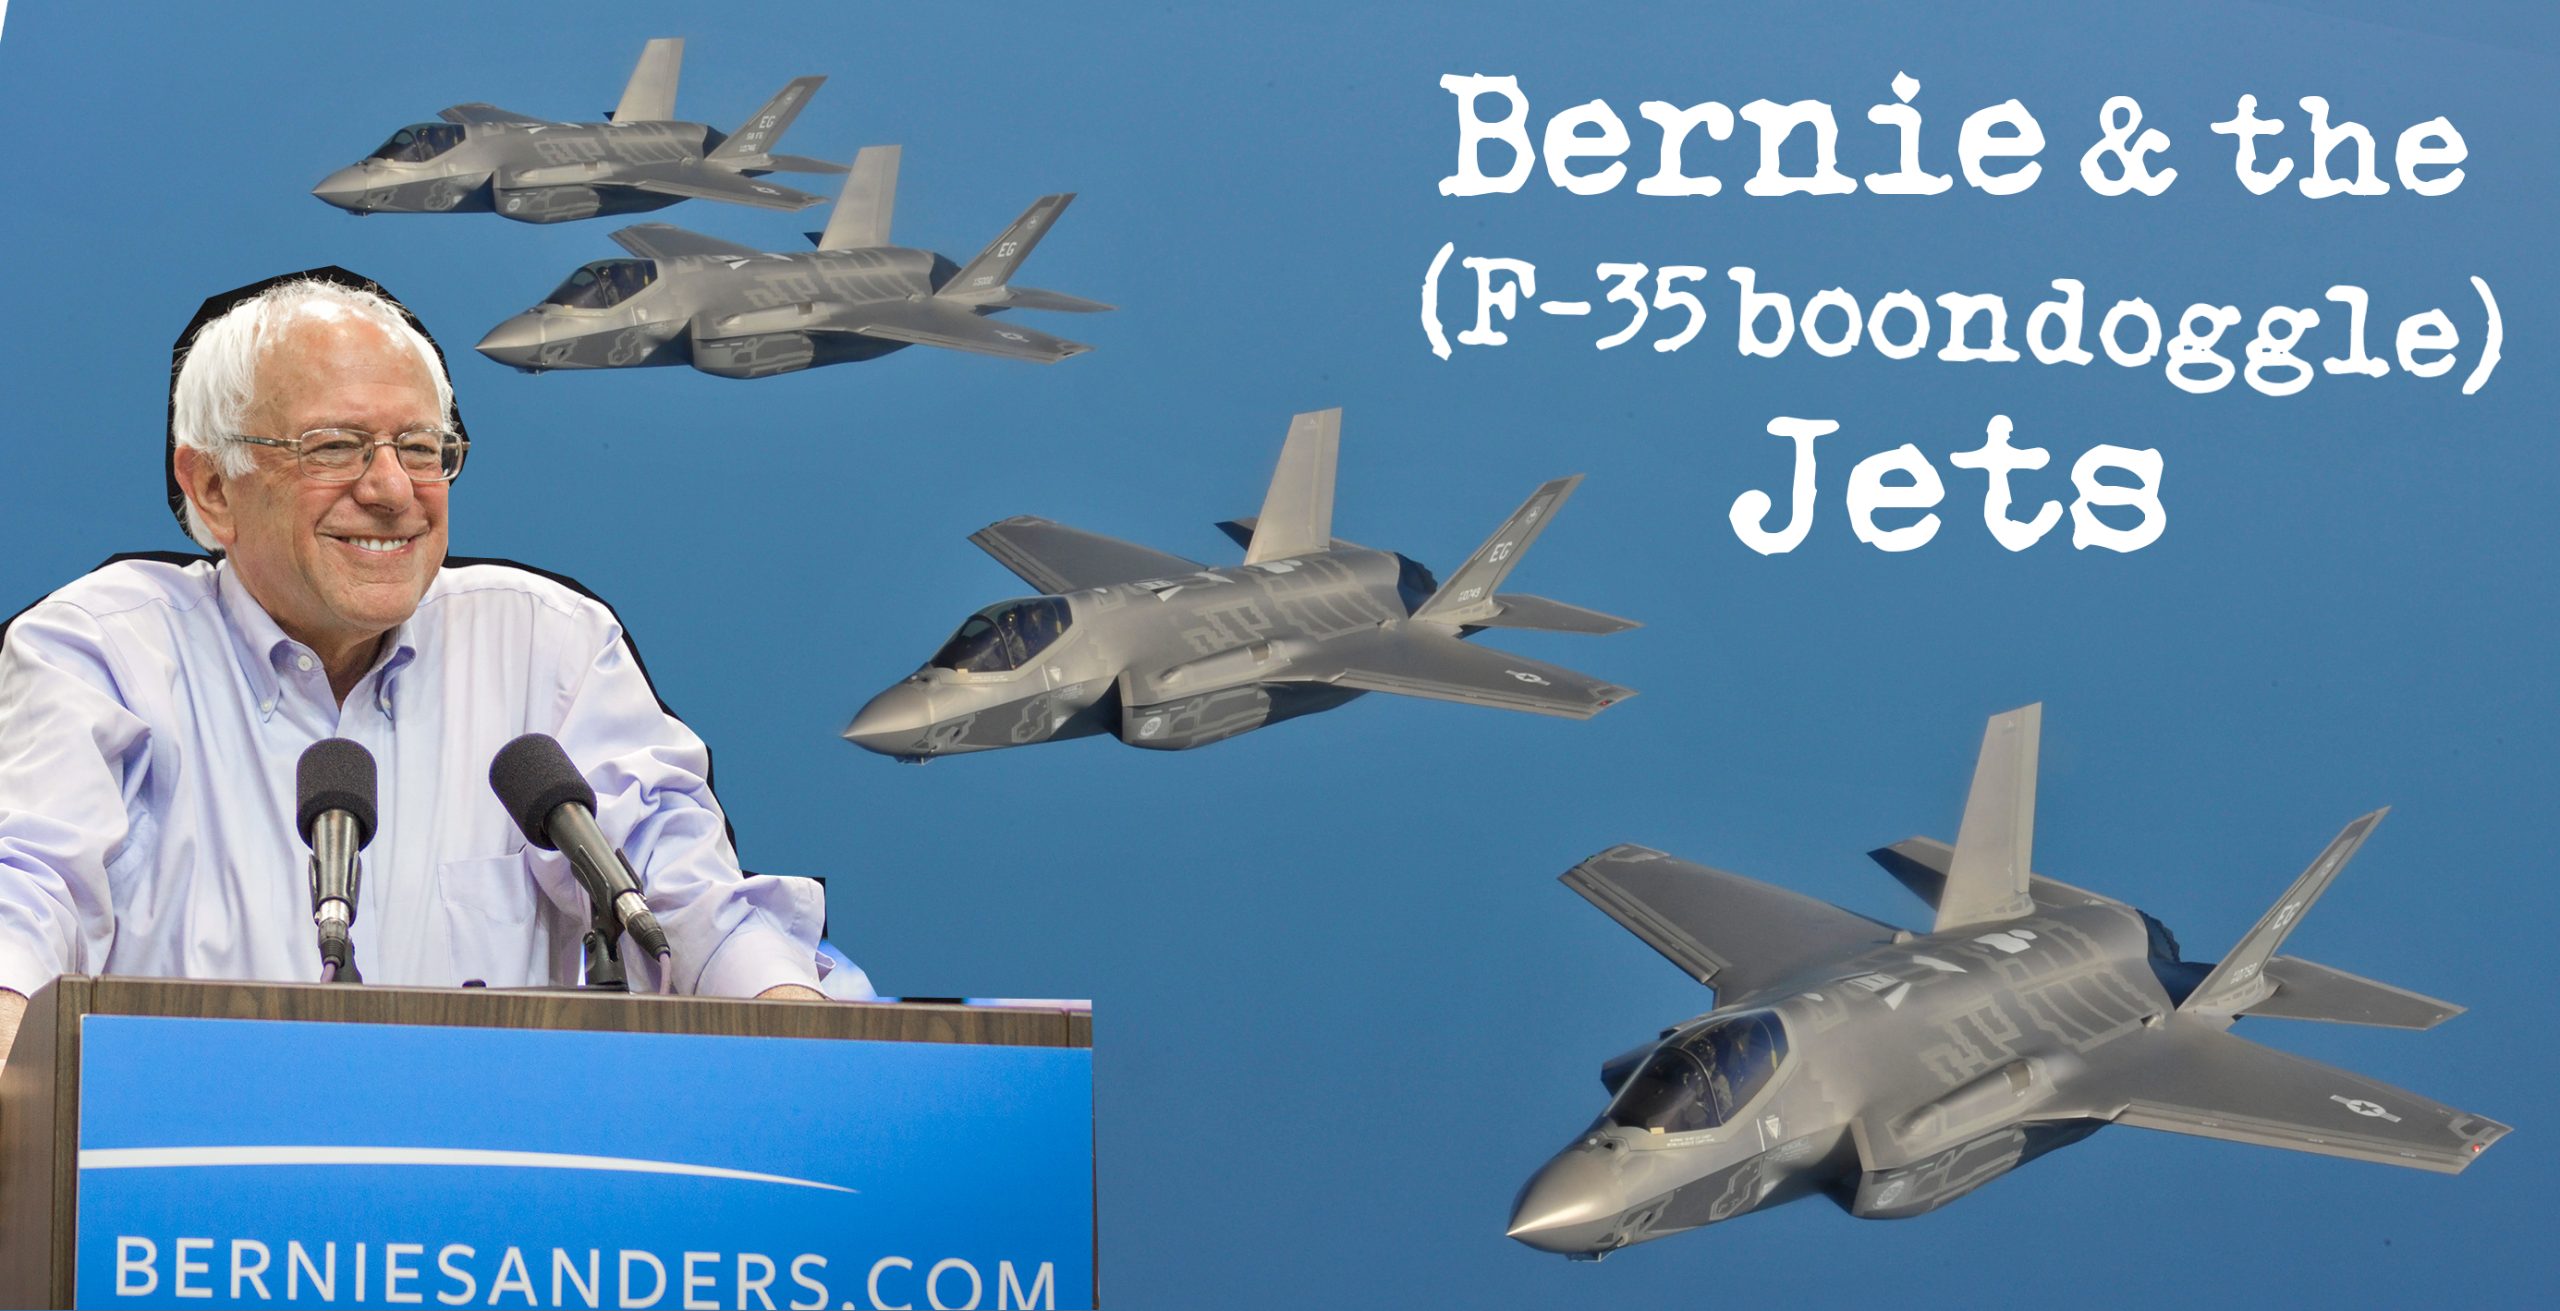 Bernie and the (F-35 boondoggle) Jets